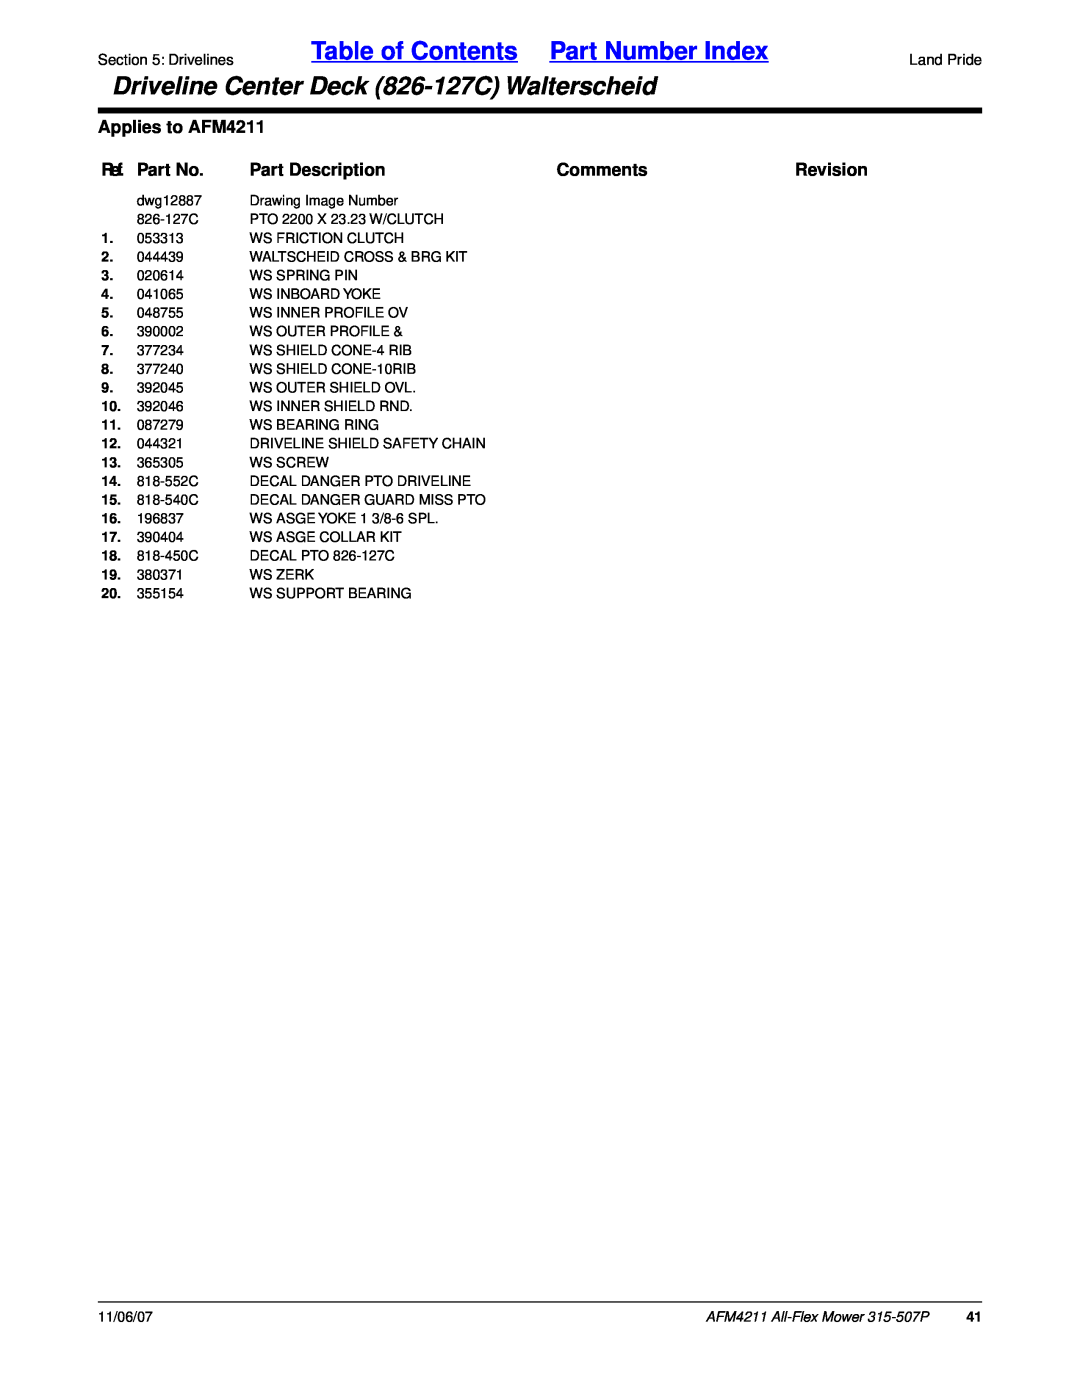 Land Pride 315-507P Table of Contents Part Number Index, Driveline Center Deck 826-127CWalterscheid, Applies to AFM4211 